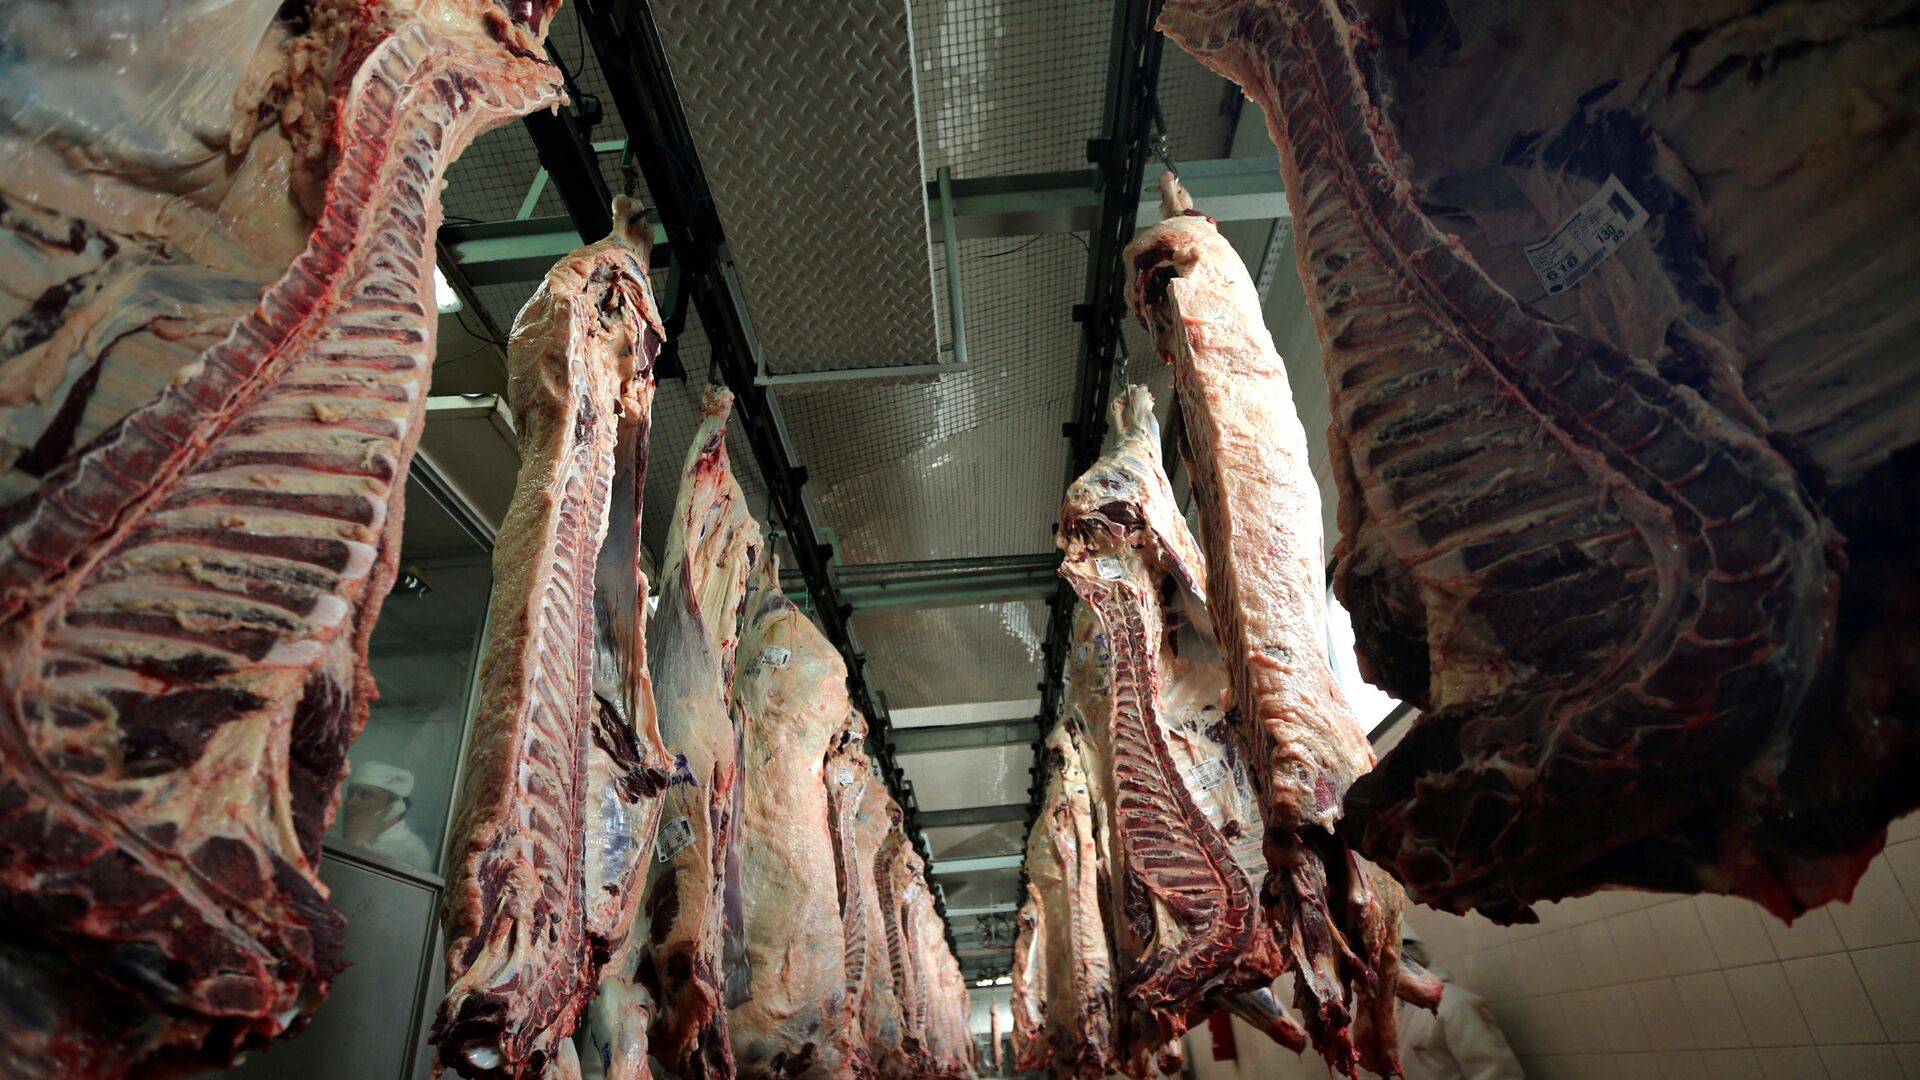 Beef carcasses hanging up at an abattoir in Argentina.  - Sputnik International, 1920, 04.05.2021